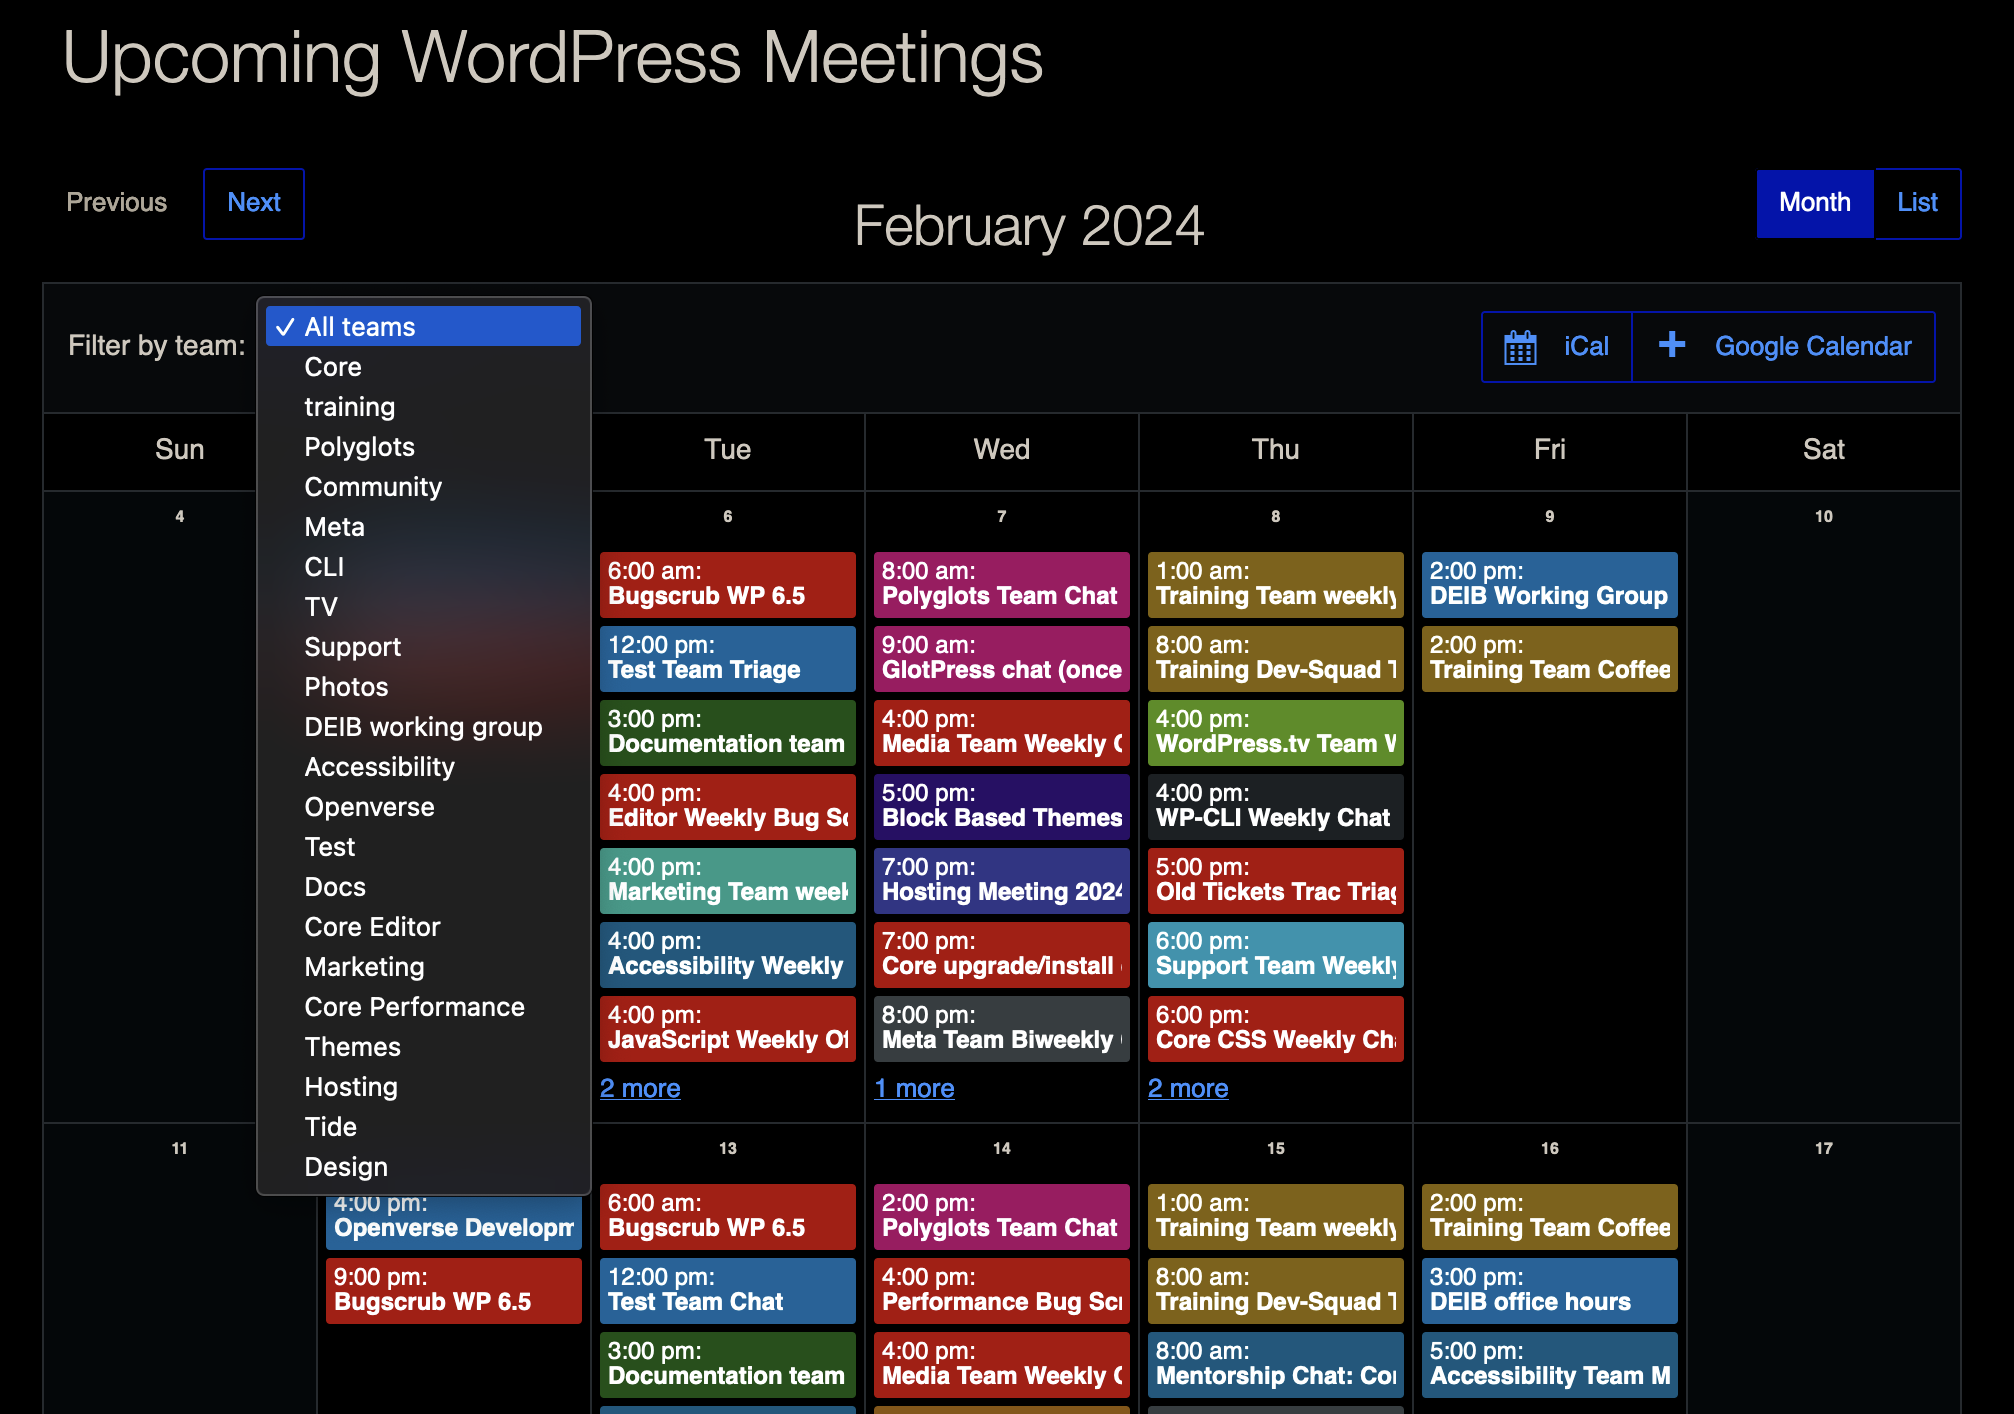 Calendar view of the WordPress.org community meetings